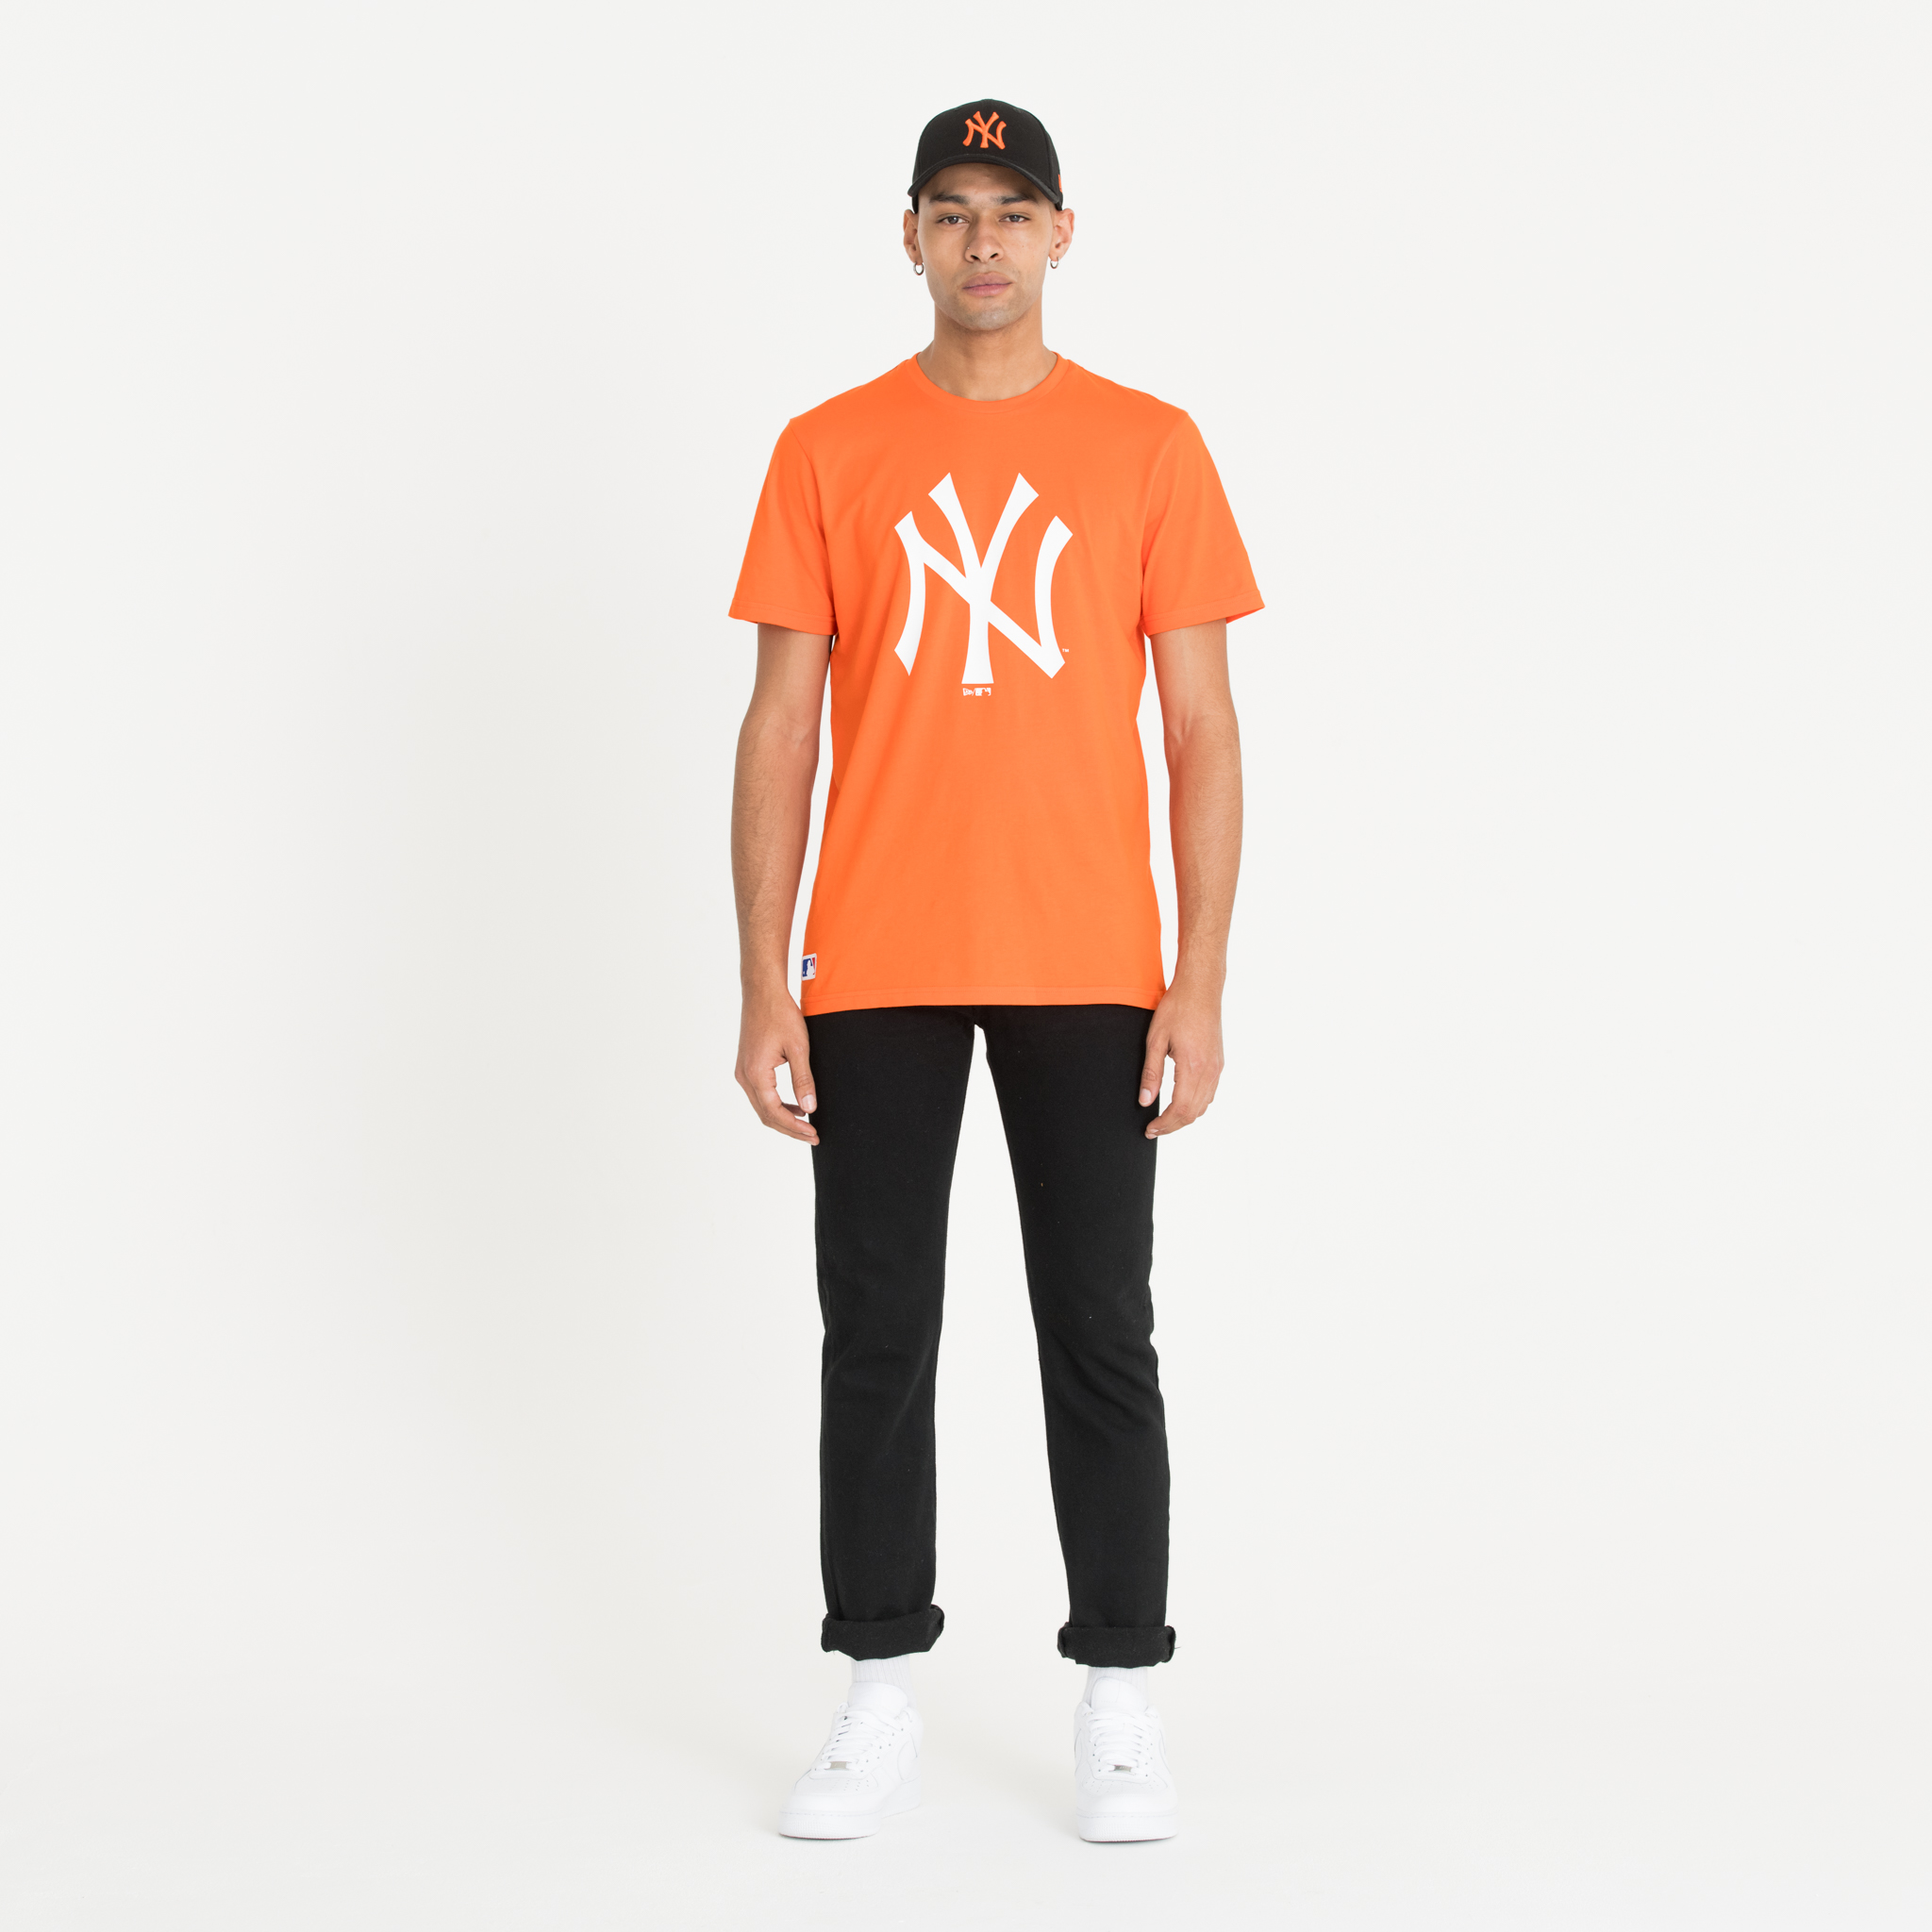 T-shirt orange des Yankees de New York